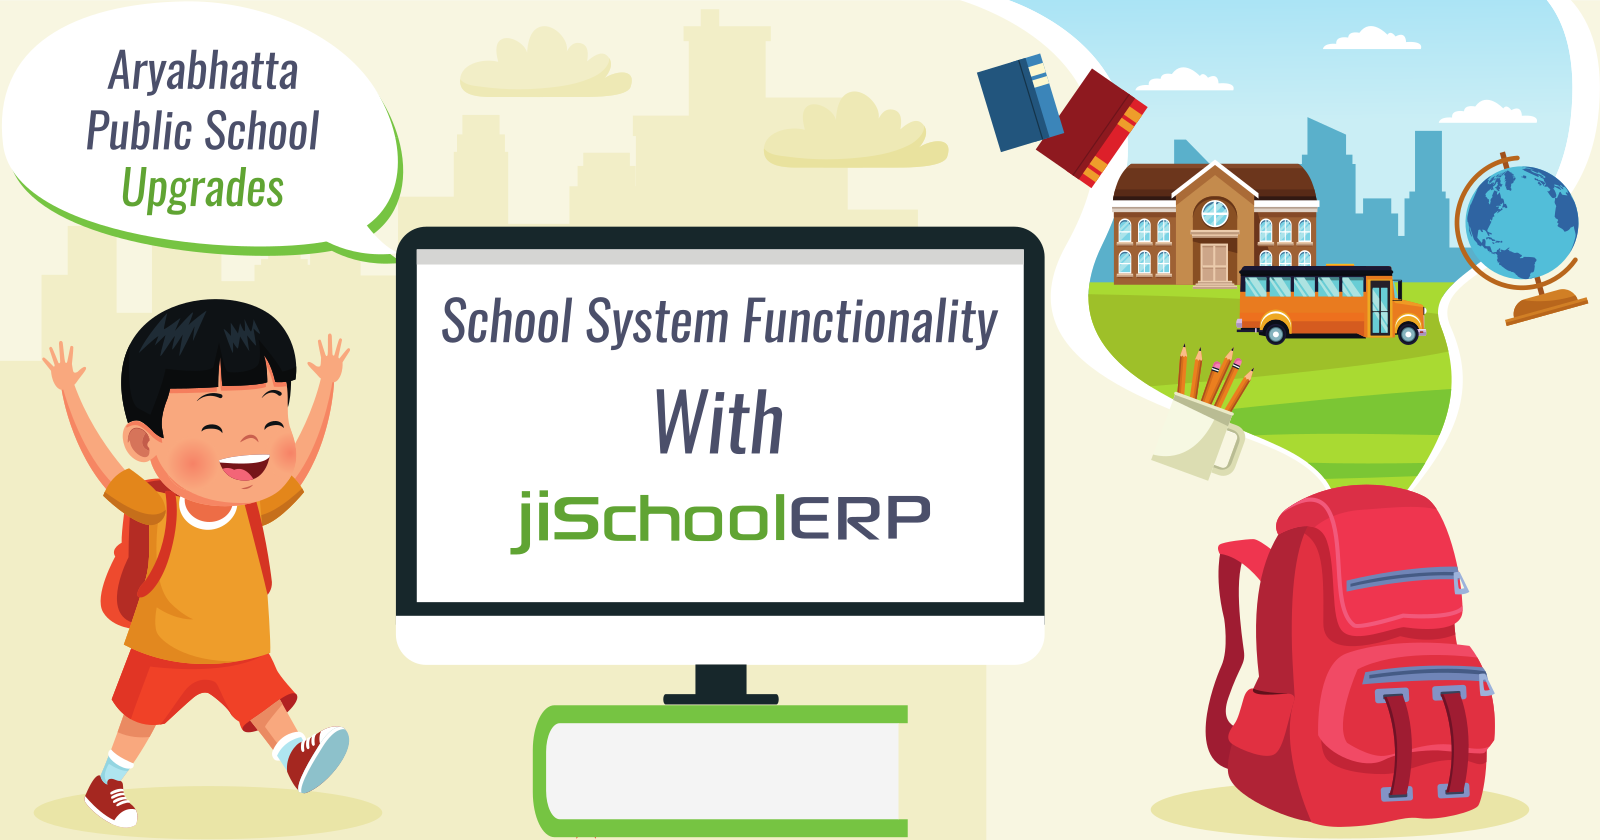 Aryabhatta Public School Upgrades Their System Functionality With jiSchoolERP